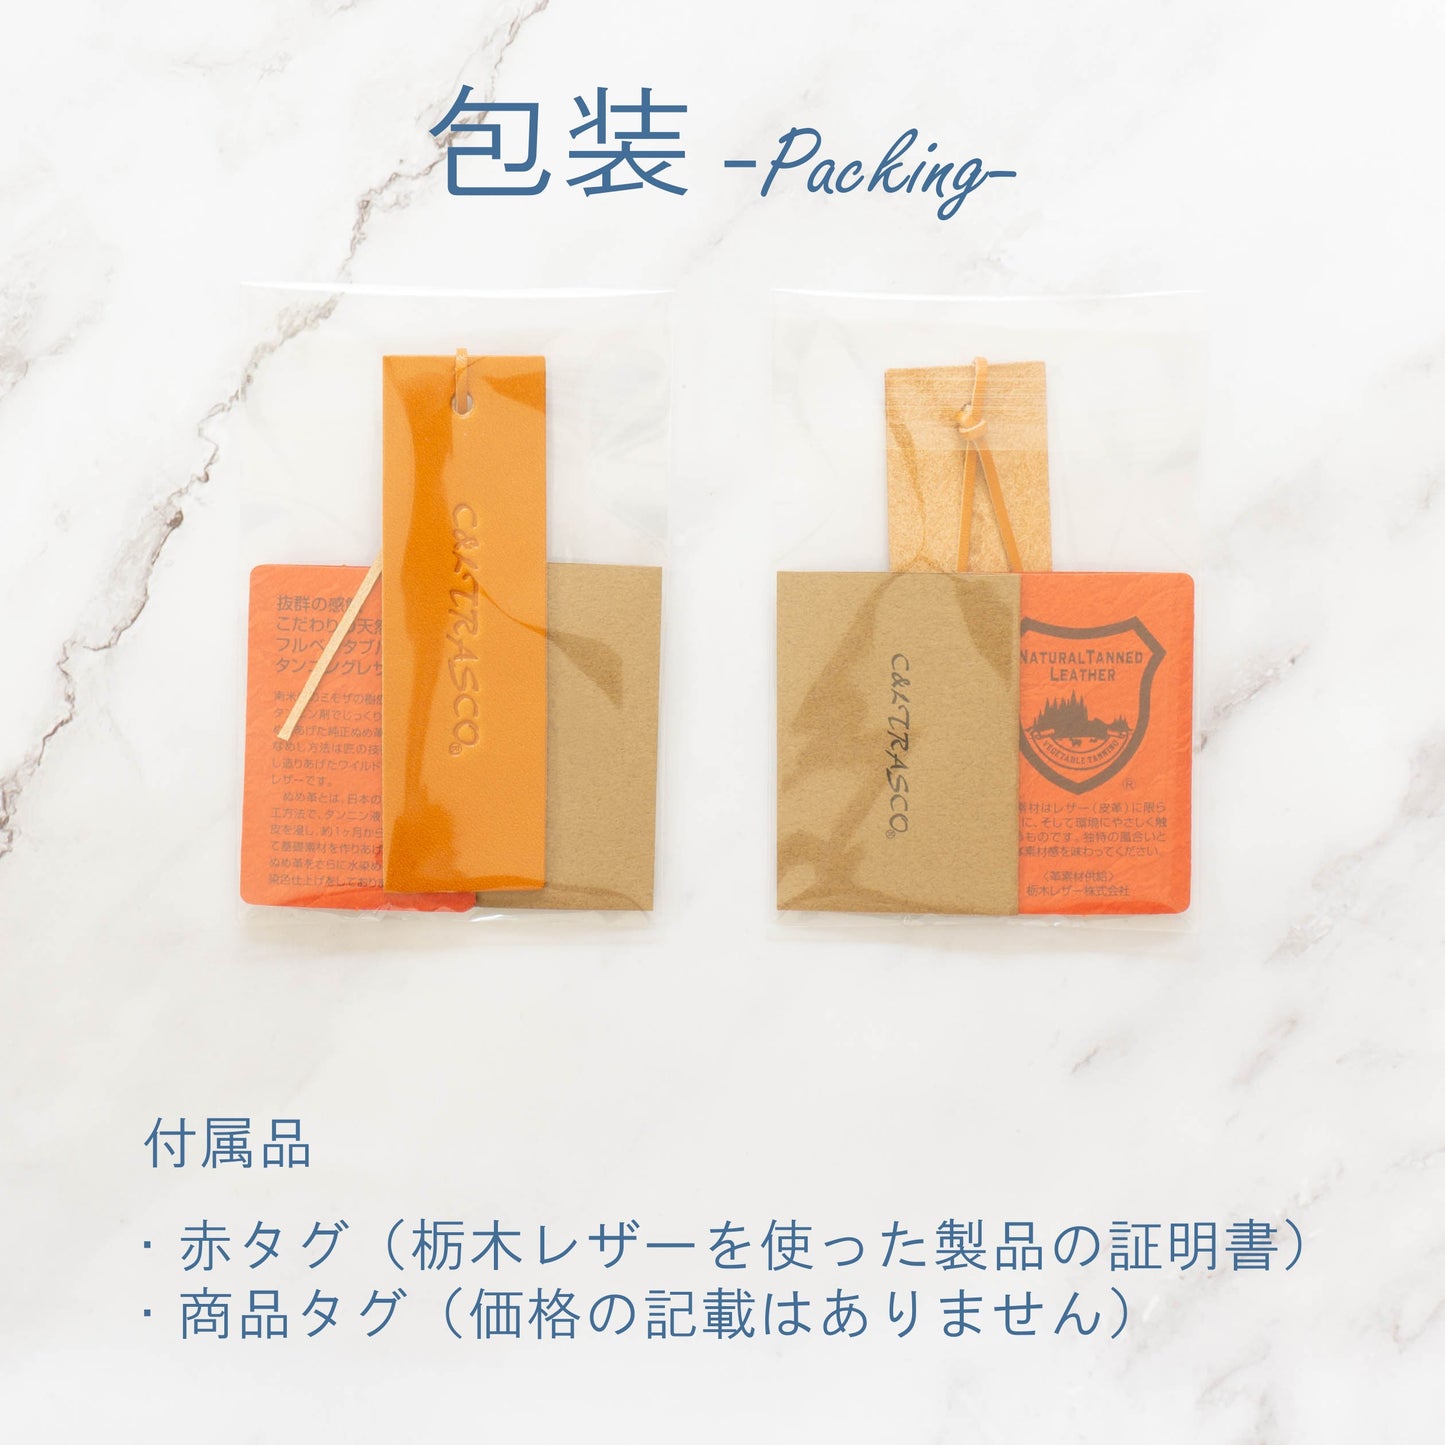 ≪Classic Series≫ “Name engraving” bookmark genuine leather (Tochigi leather)